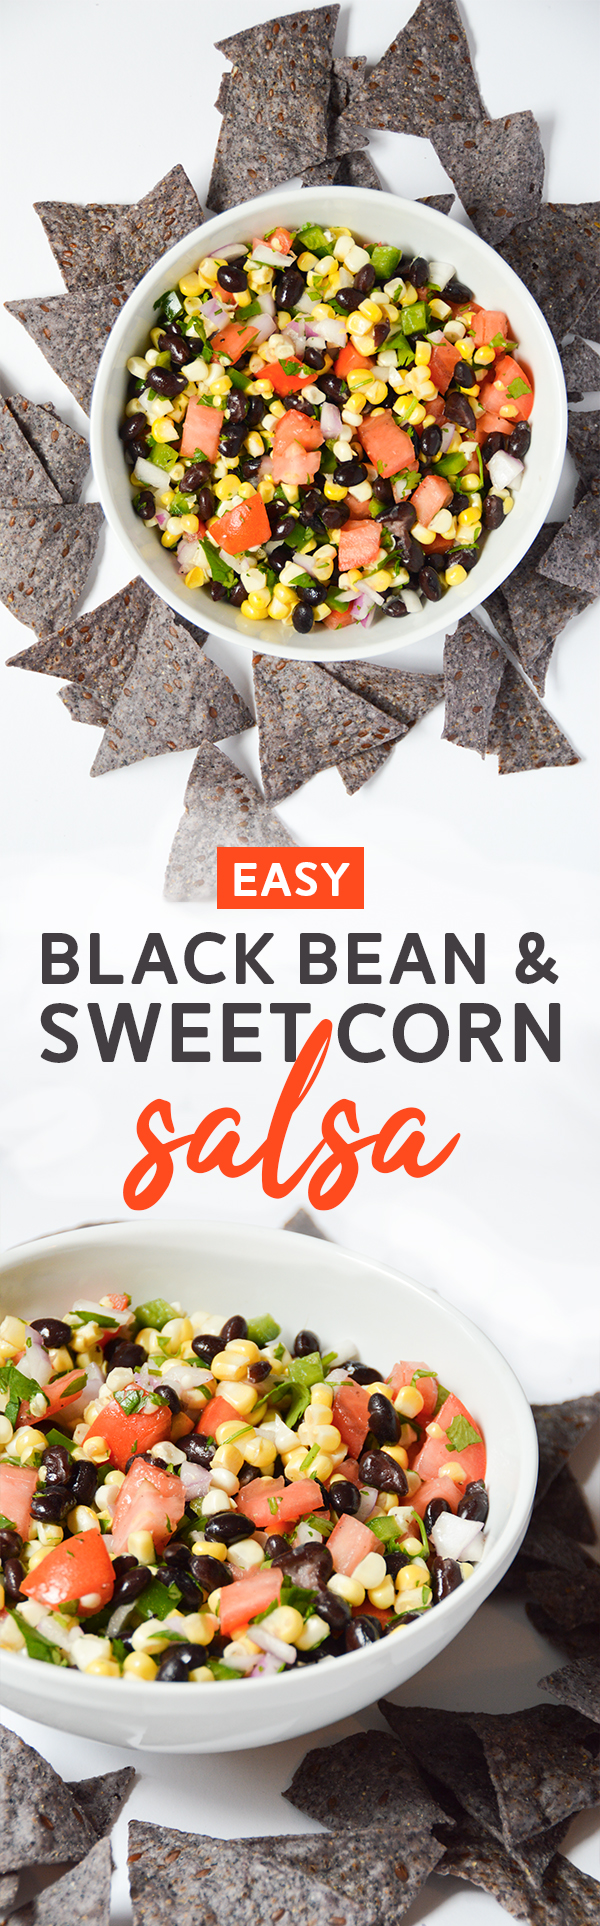 Black Bean & Corn Salsa - Under 10 ingredients in this easy black bean and sweet corn salsa! #salsa #recipe #plantbased